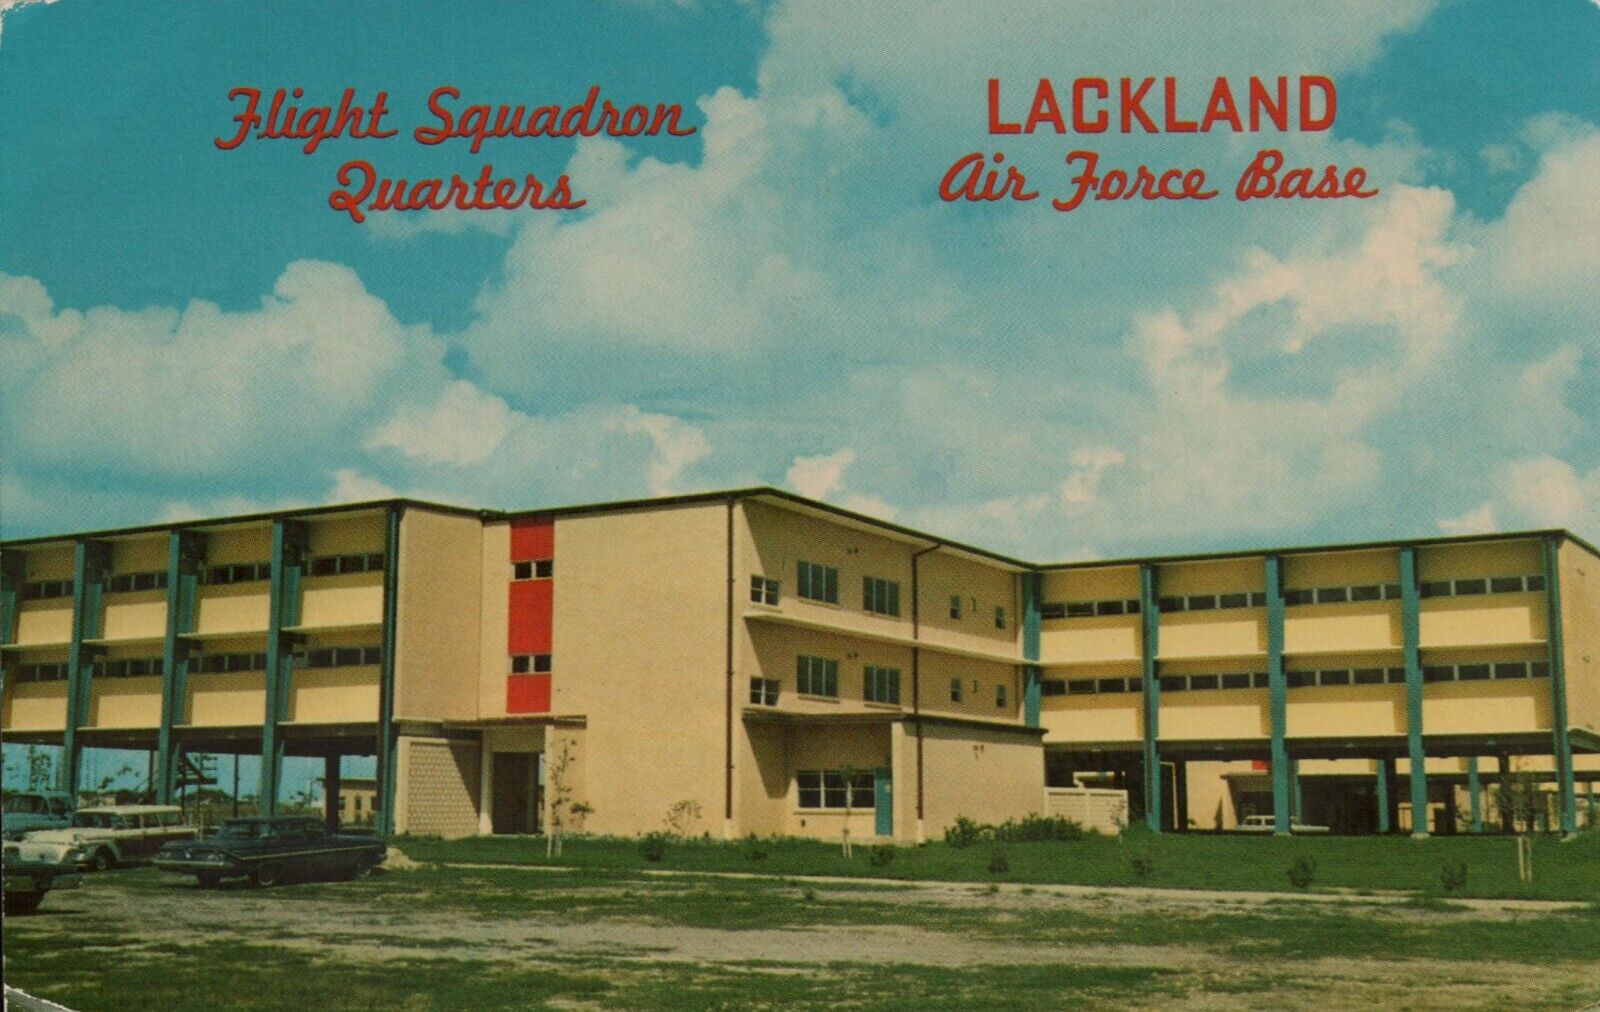  Vtg Postcard Flight Squadron Quarters Lackland Air Force Base San Antonio Texas